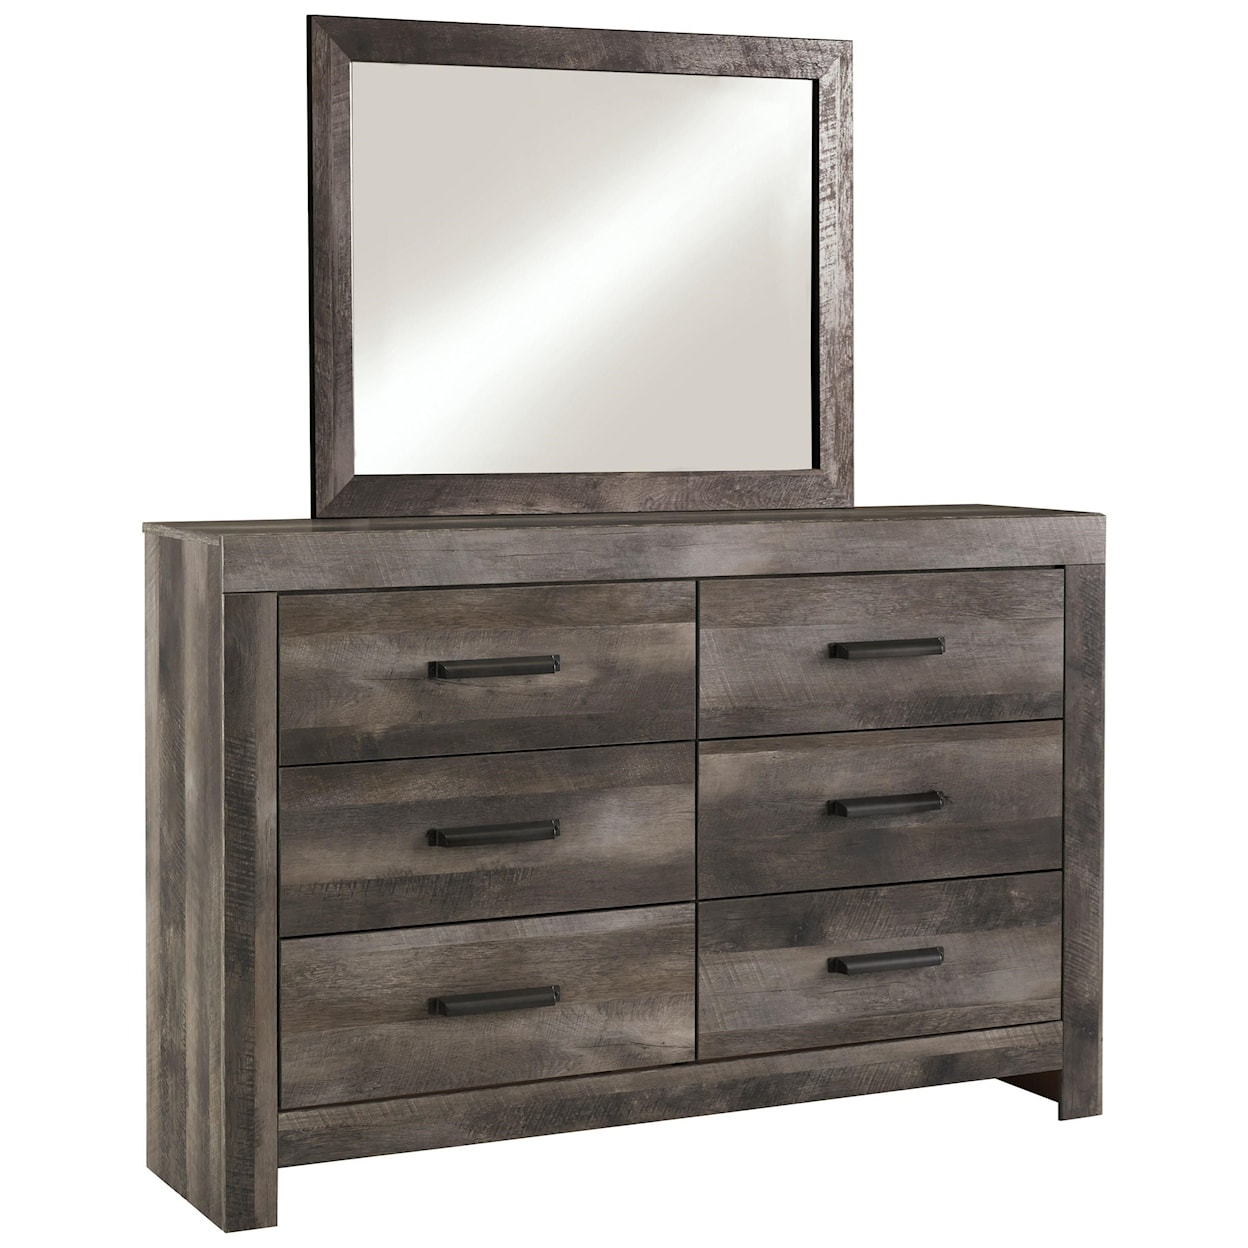 Ashley Furniture Signature Design Wynnlow Bedroom Mirror